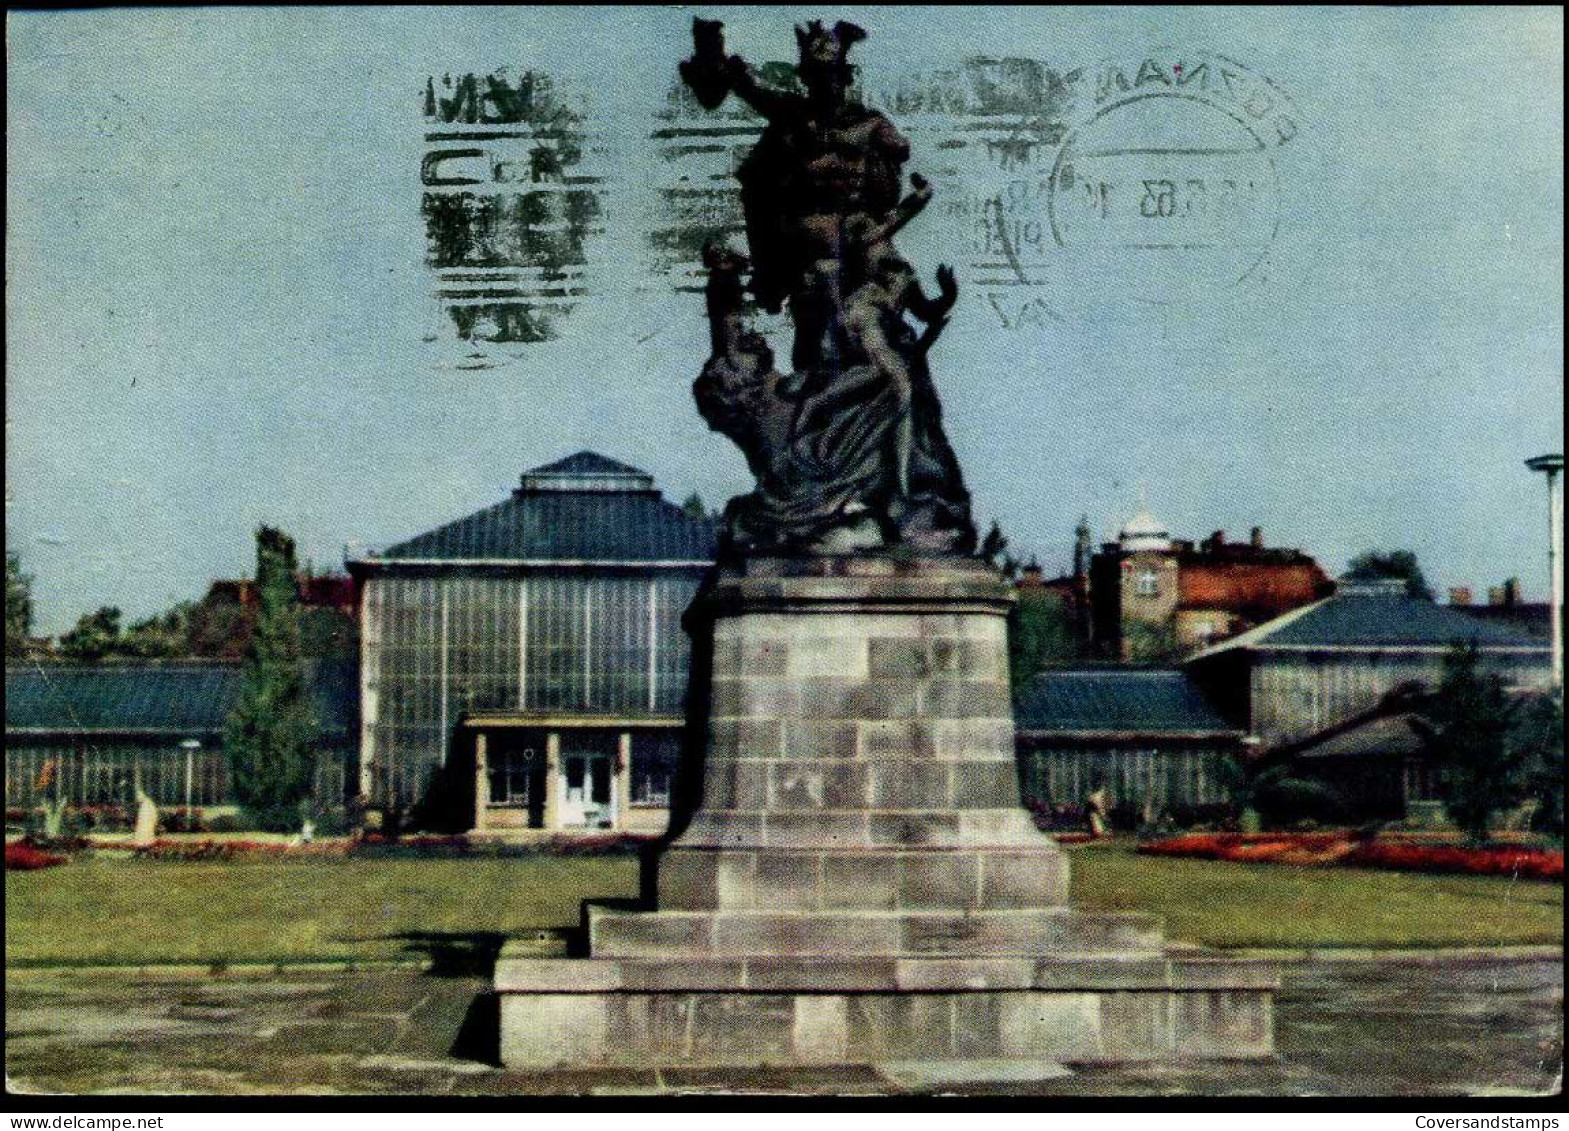 Post Card To Marcinelle, Belgium - Storia Postale